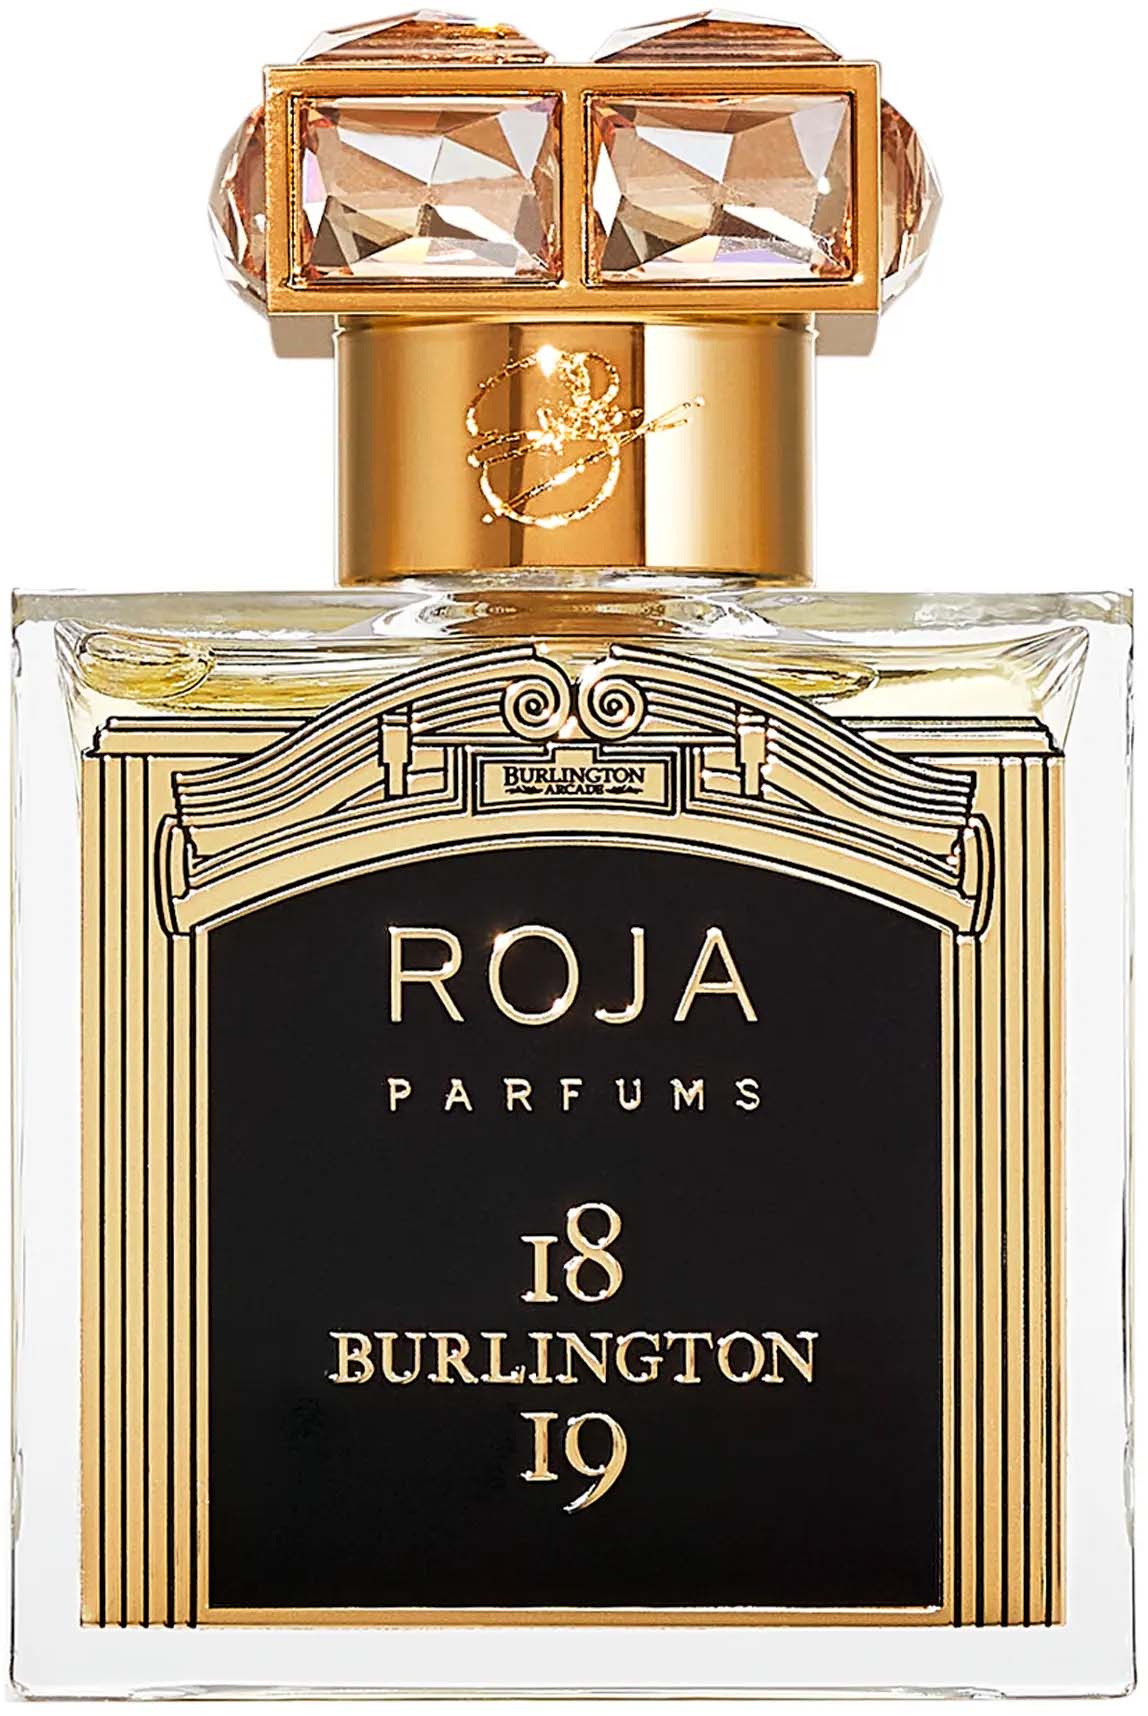 roja parfums burlington 1819 woda perfumowana 100 ml   